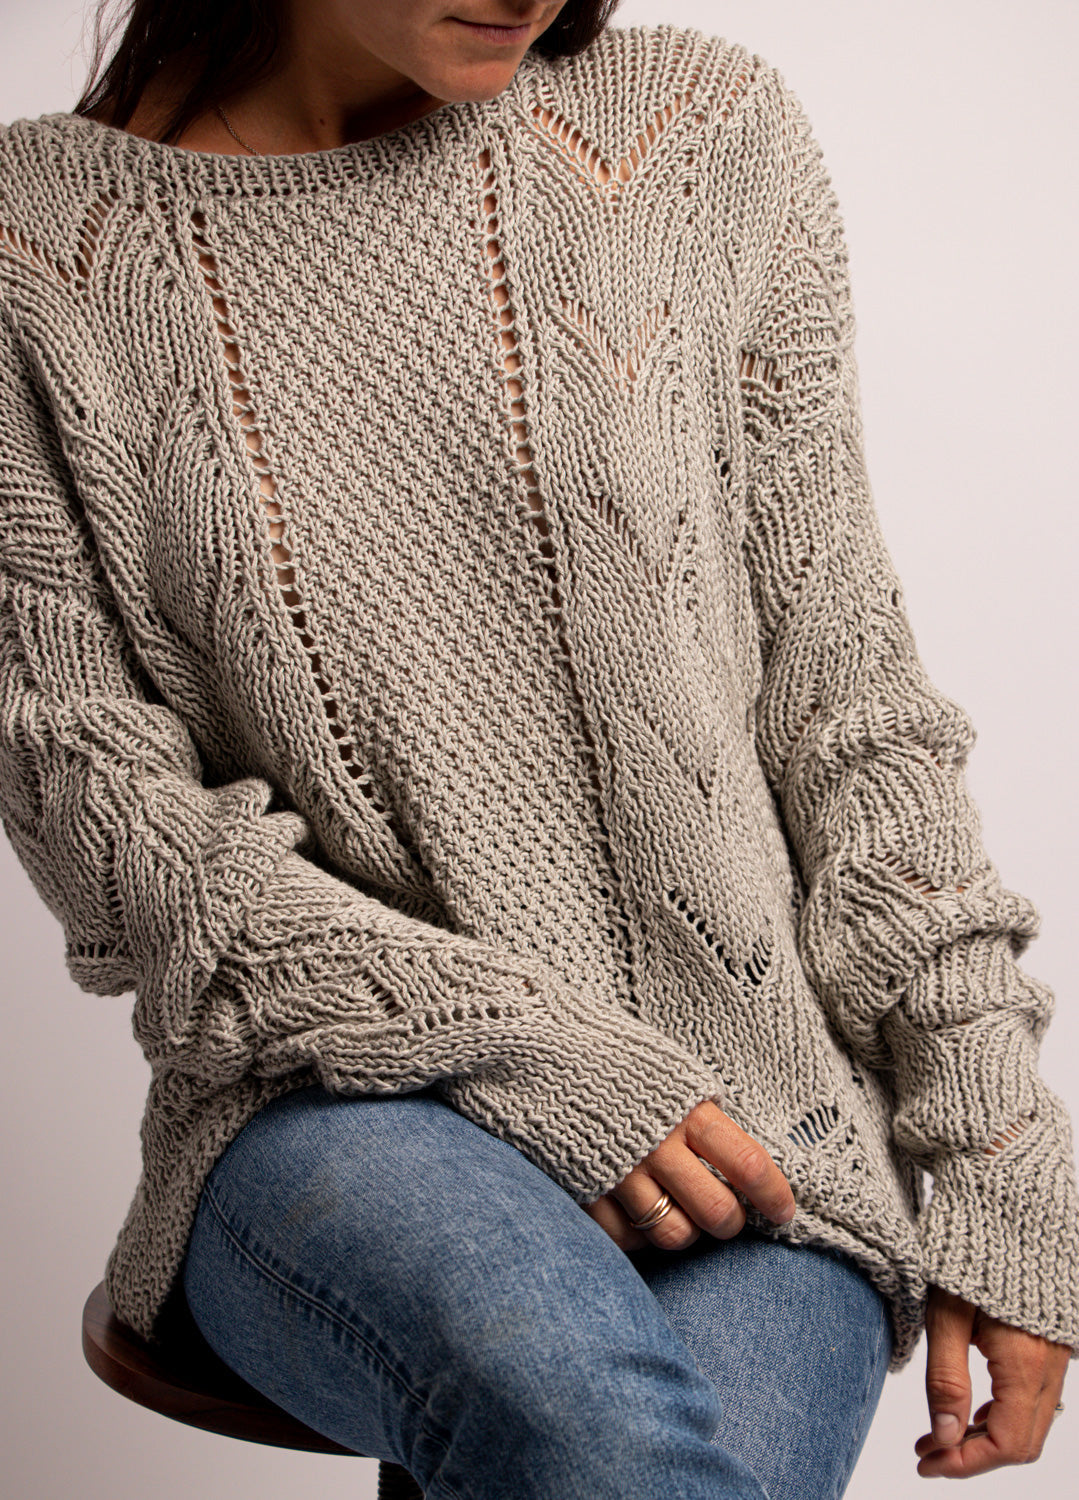 Aeraki Sweater Pattern